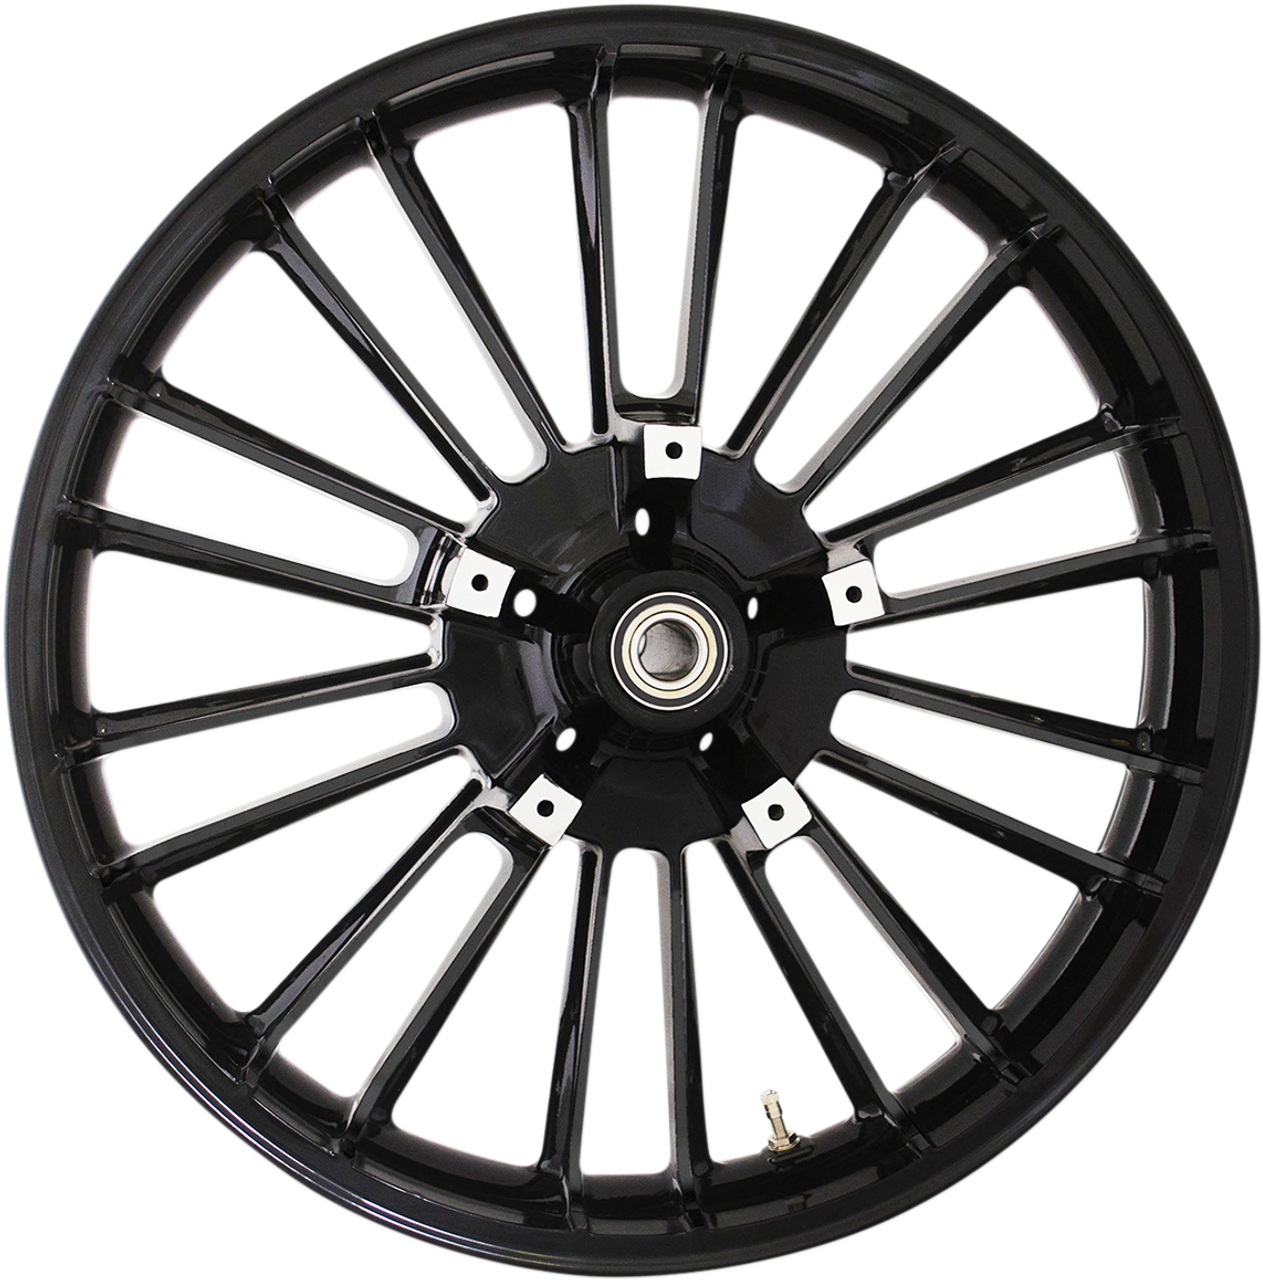 Front Wheel - Atlantic - Dual Disc/No ABS - Black - 21"x3.50" - 08+ FL